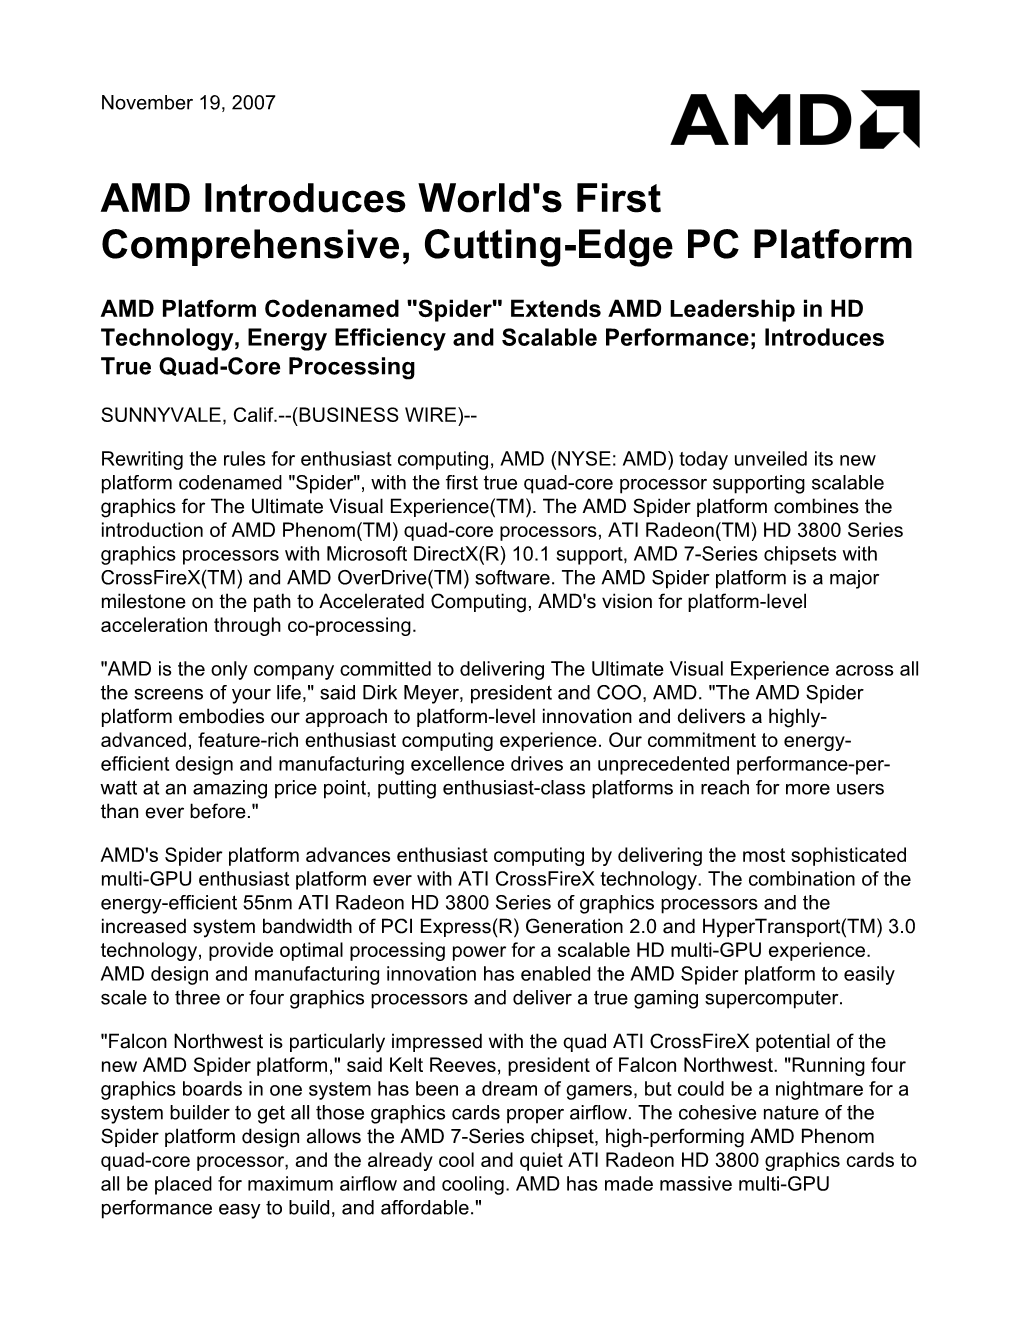 AMD Introduces World's First Comprehensive, Cutting-Edge PC Platform